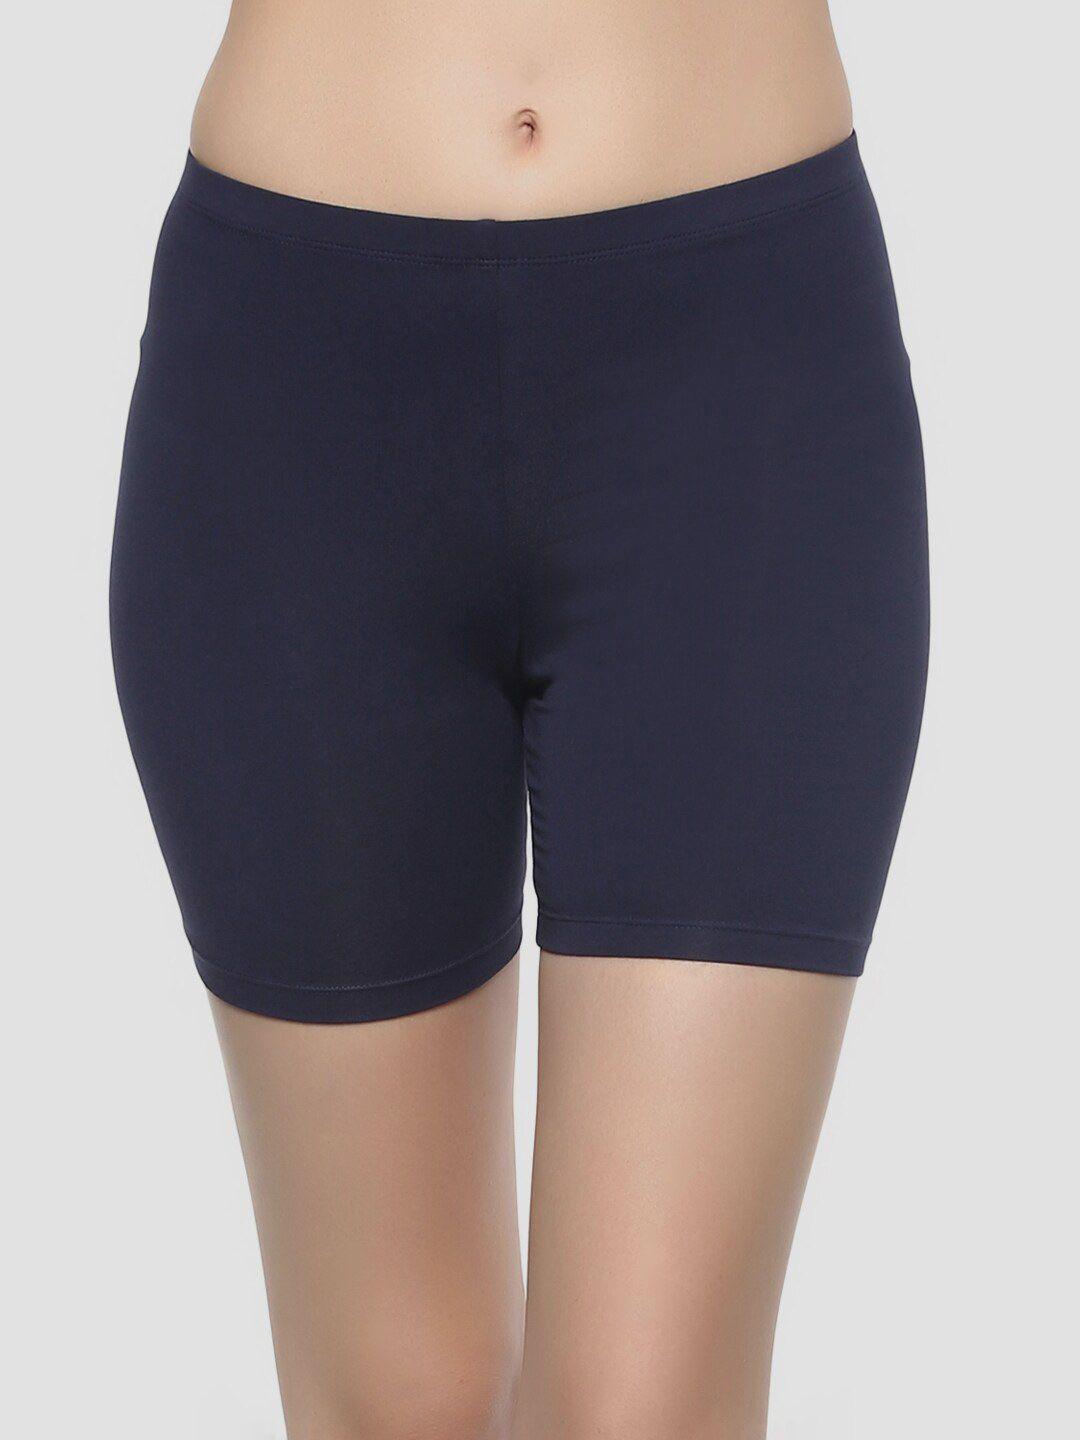 soie-women-navy-blue-solid-cycling-shorts-cs-1